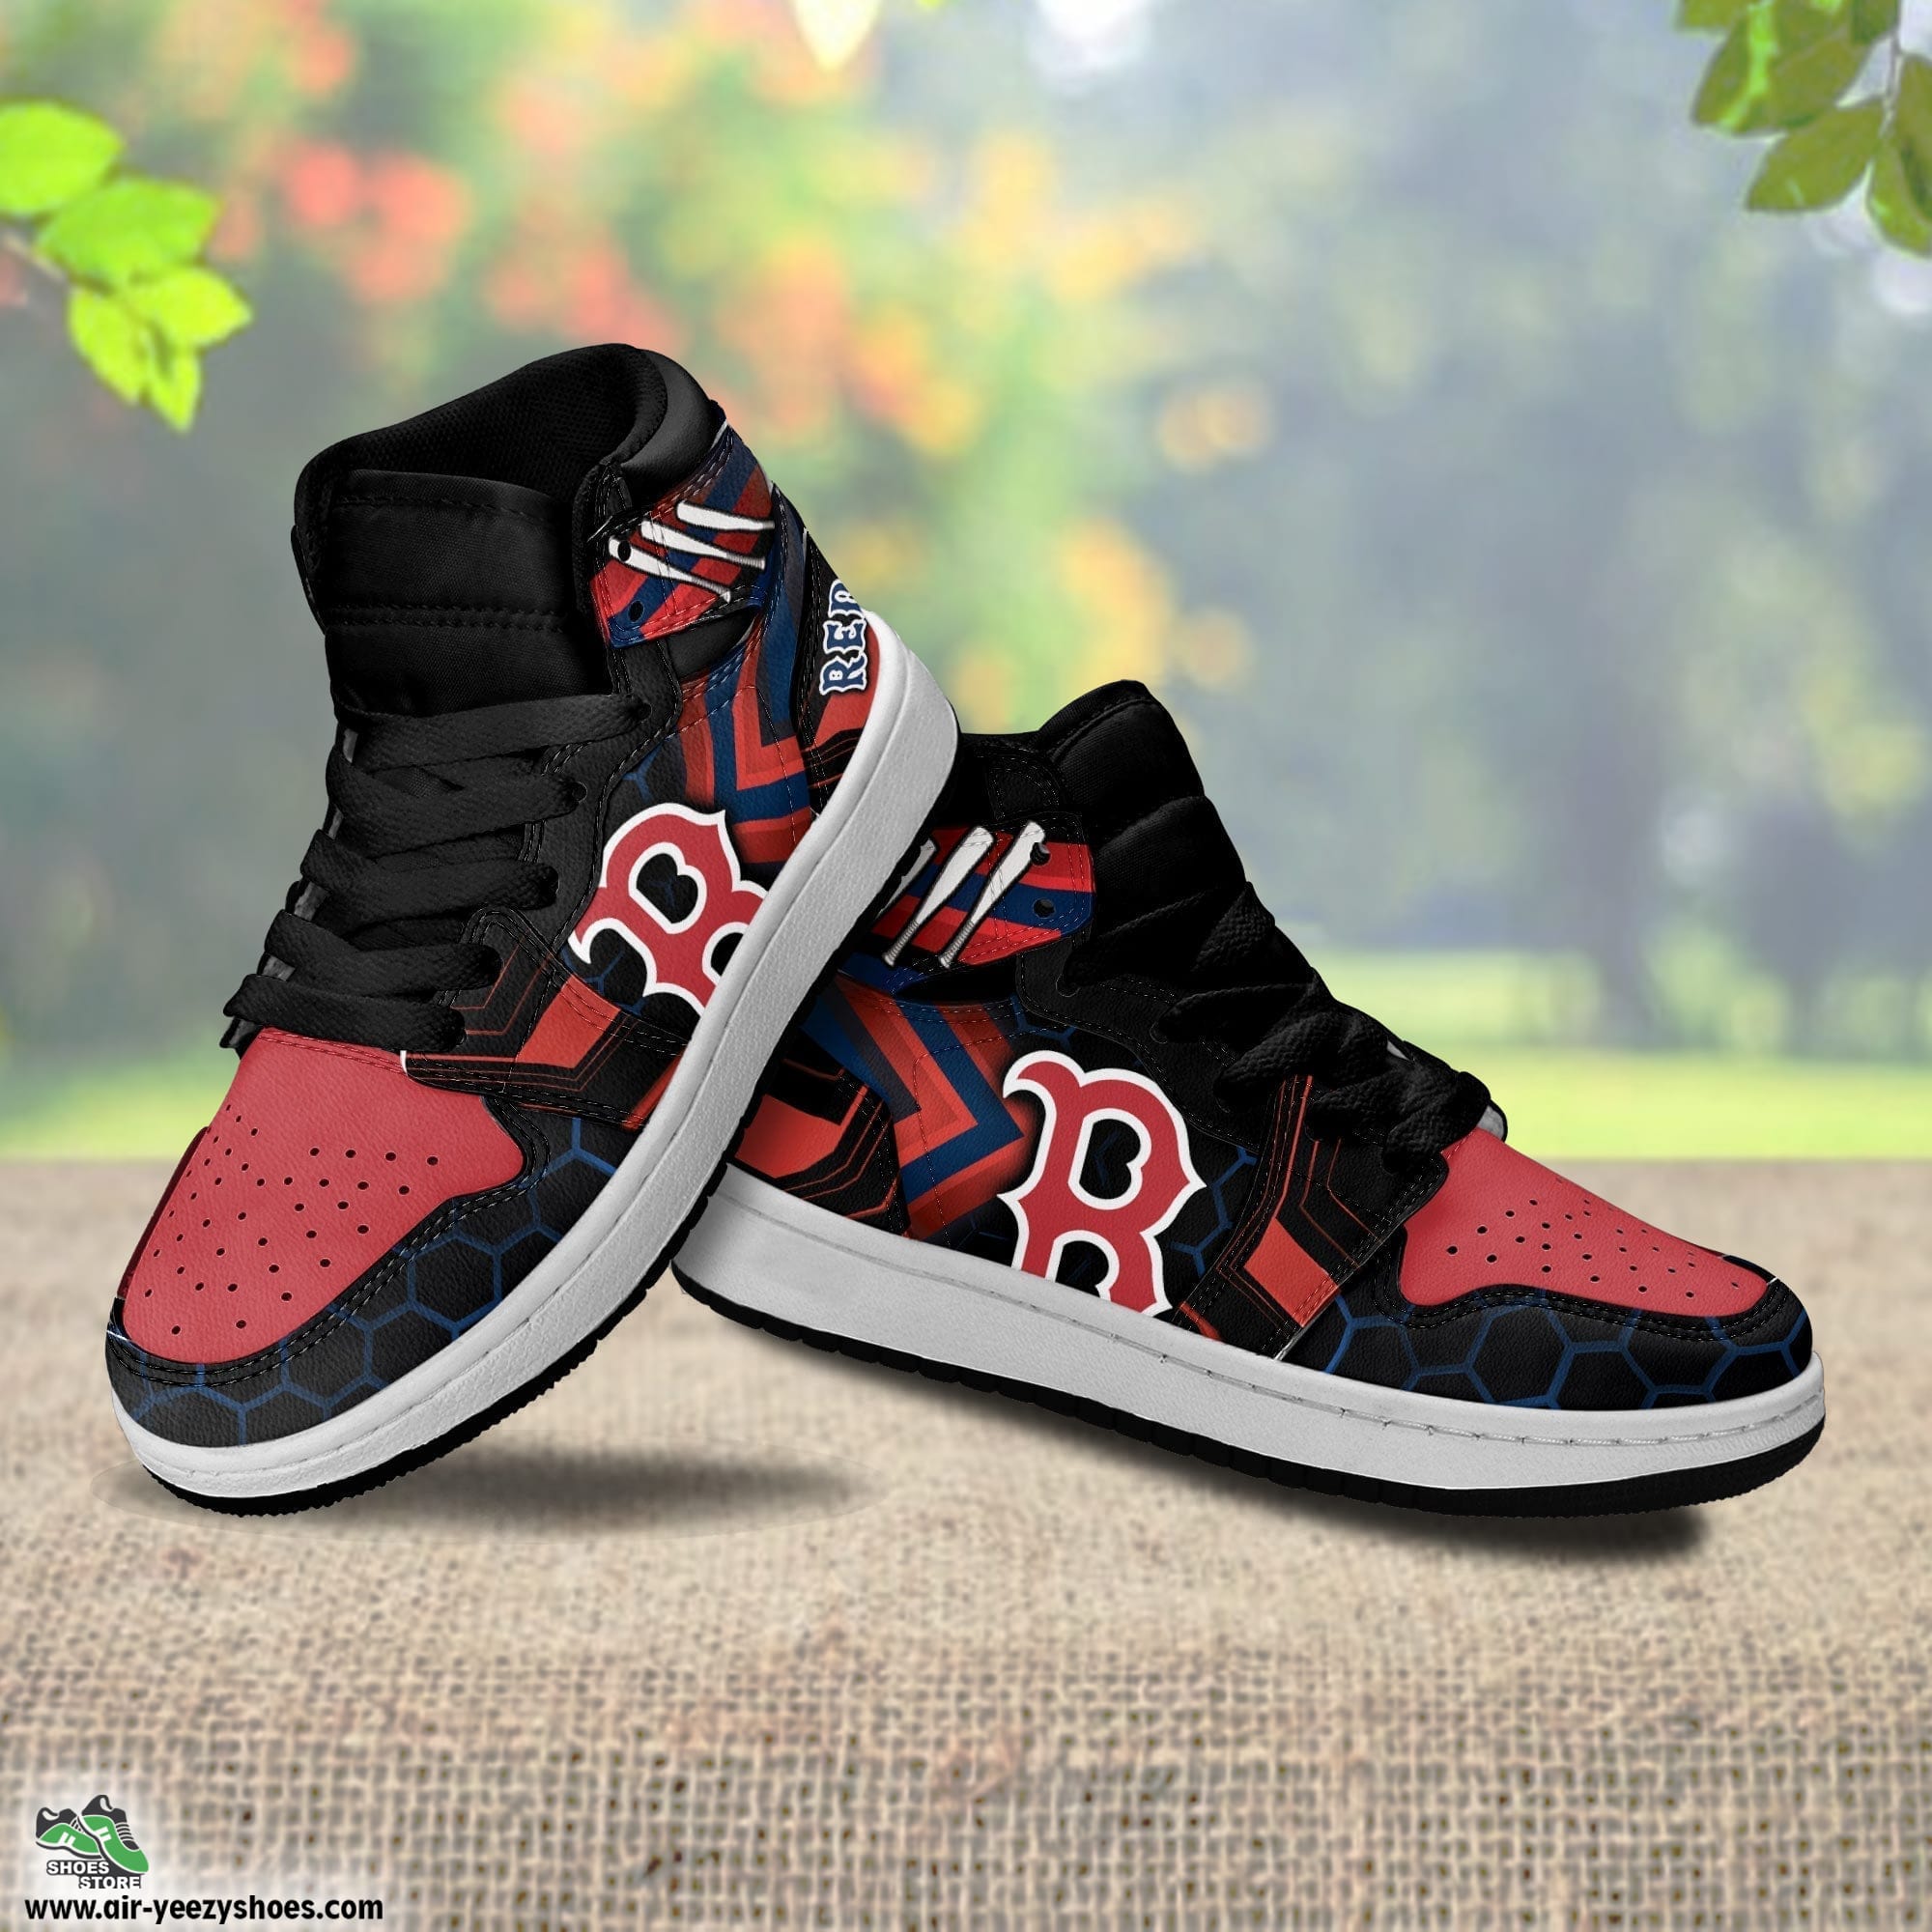 Boston Red Sox Air Sneakers, Red Sox Footwear